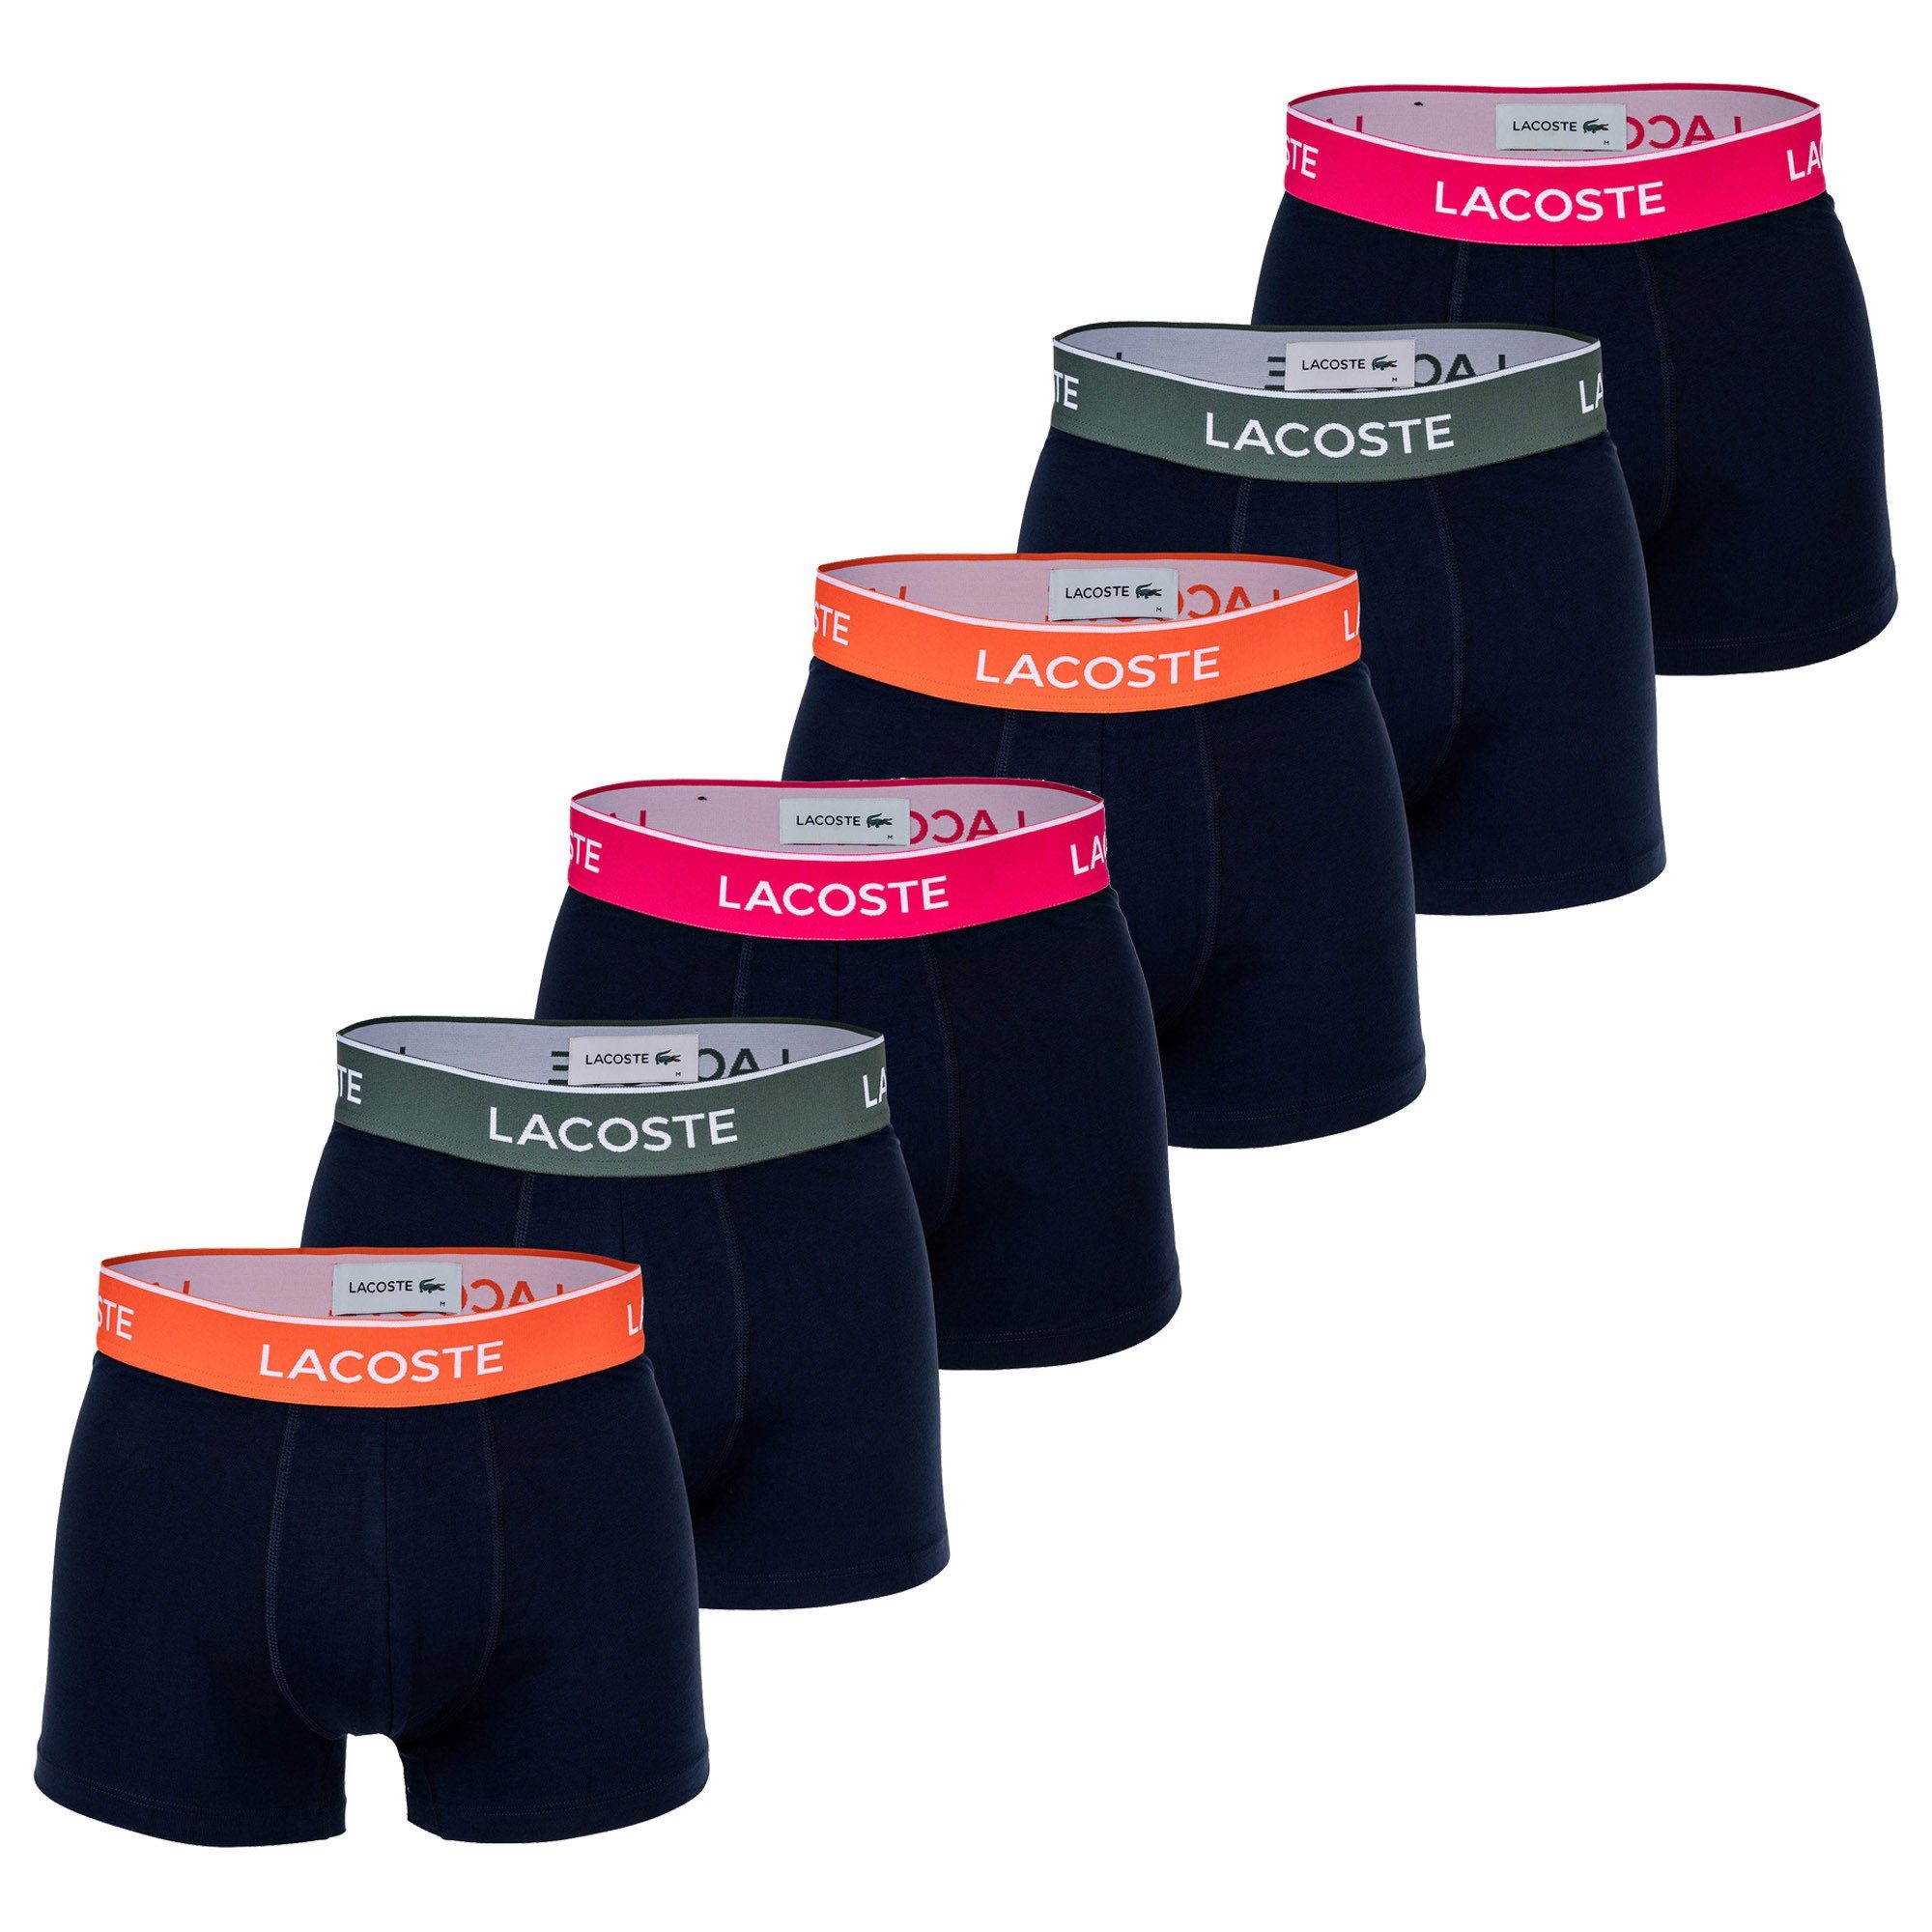 Lacoste Boxer Herren Boxershorts, 6er Pack - Trunks, Casual Dunkelblau/Orange/Grün/Pink